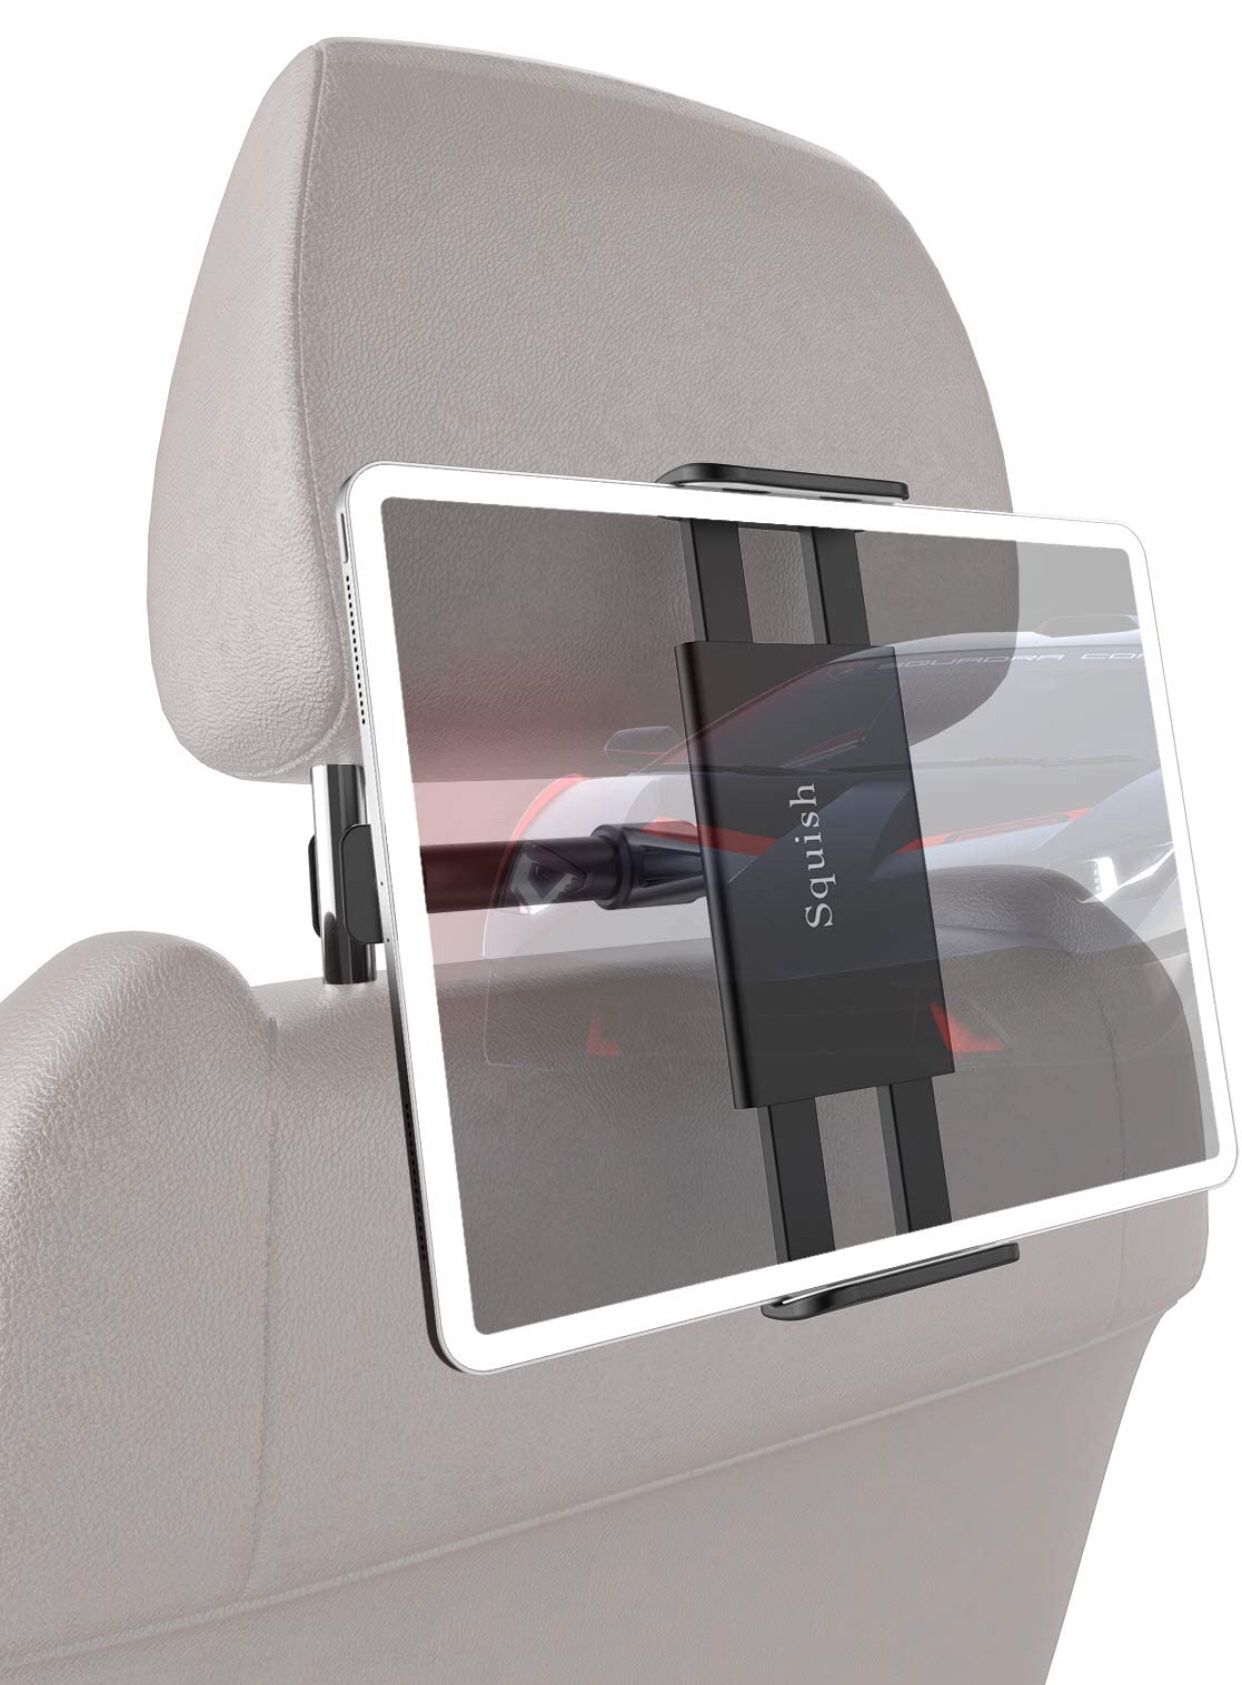 Car Headrest Mount Holder, Universal Car Headrest Mount Car Backseat Tablet Holder for iPad Pro/Air/Mini, Kindle, Tablets Nintendo Switch Smartphones